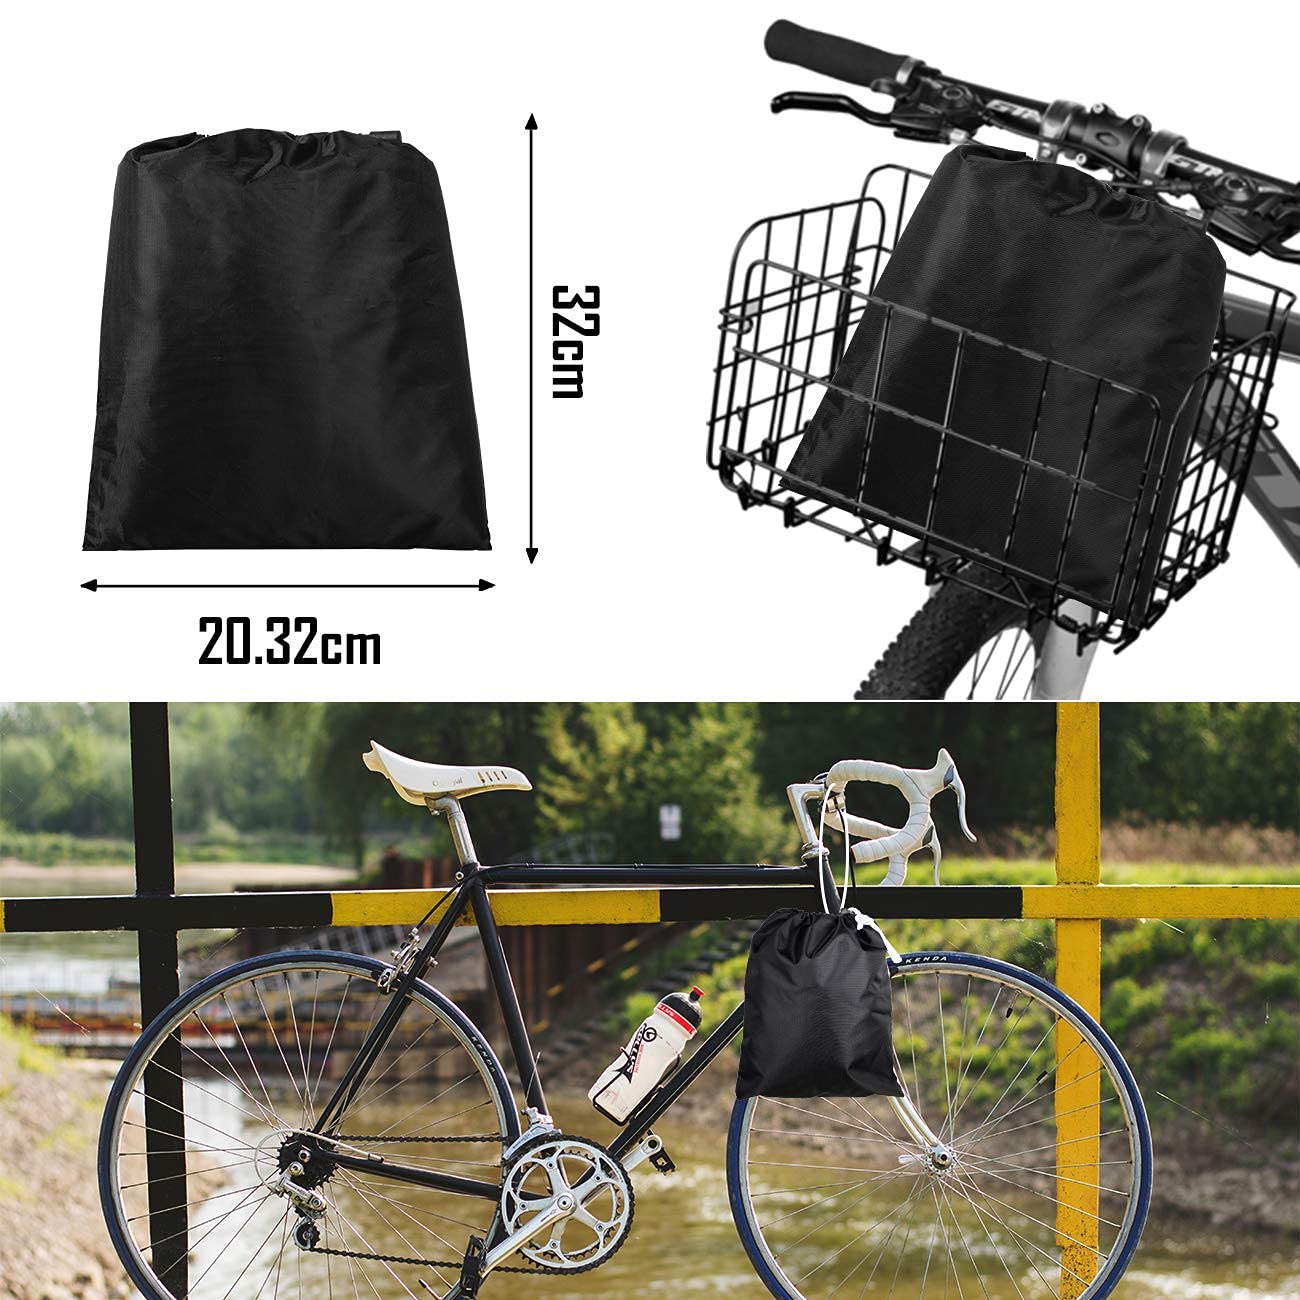 Favoto Black Bike Cover Suit for 2 or 3 Bikes